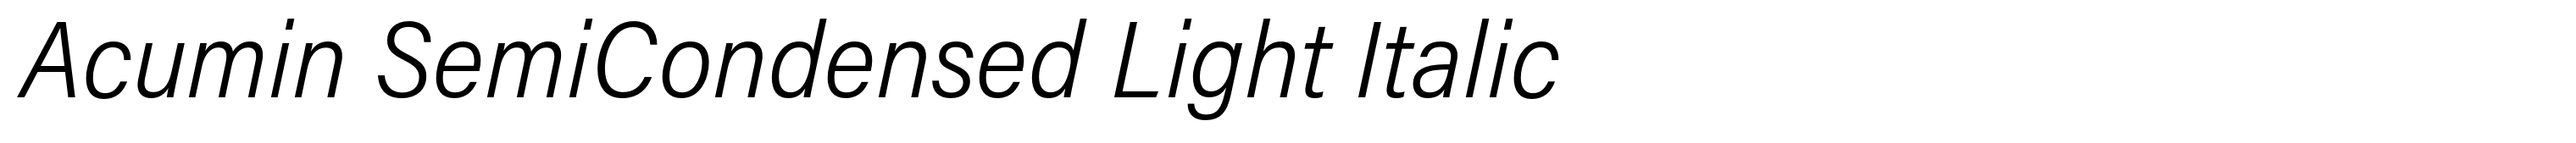 Acumin SemiCondensed Light Italic